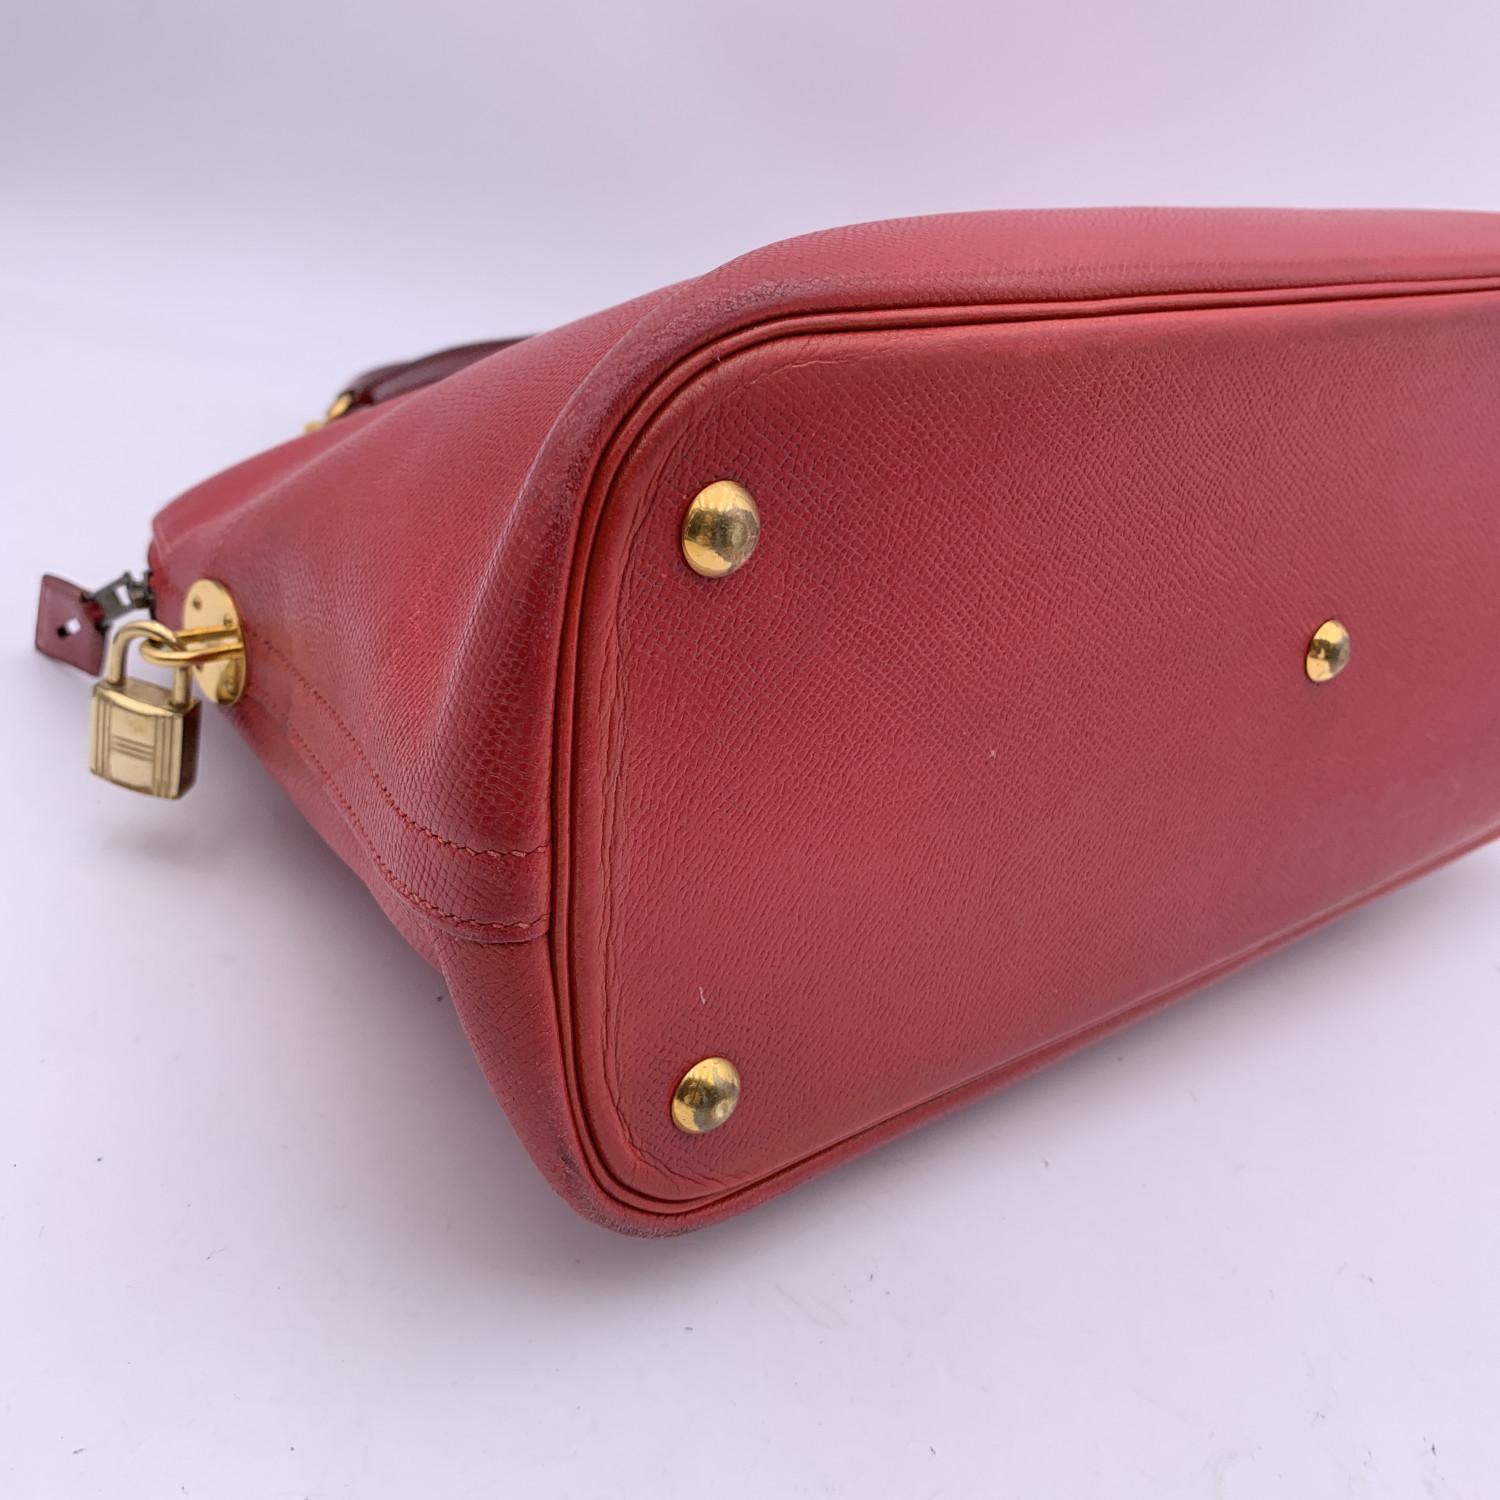 Hermes Vintage 1992 Red Leather Bolide 35 Satchel Bag with Strap For Sale 4